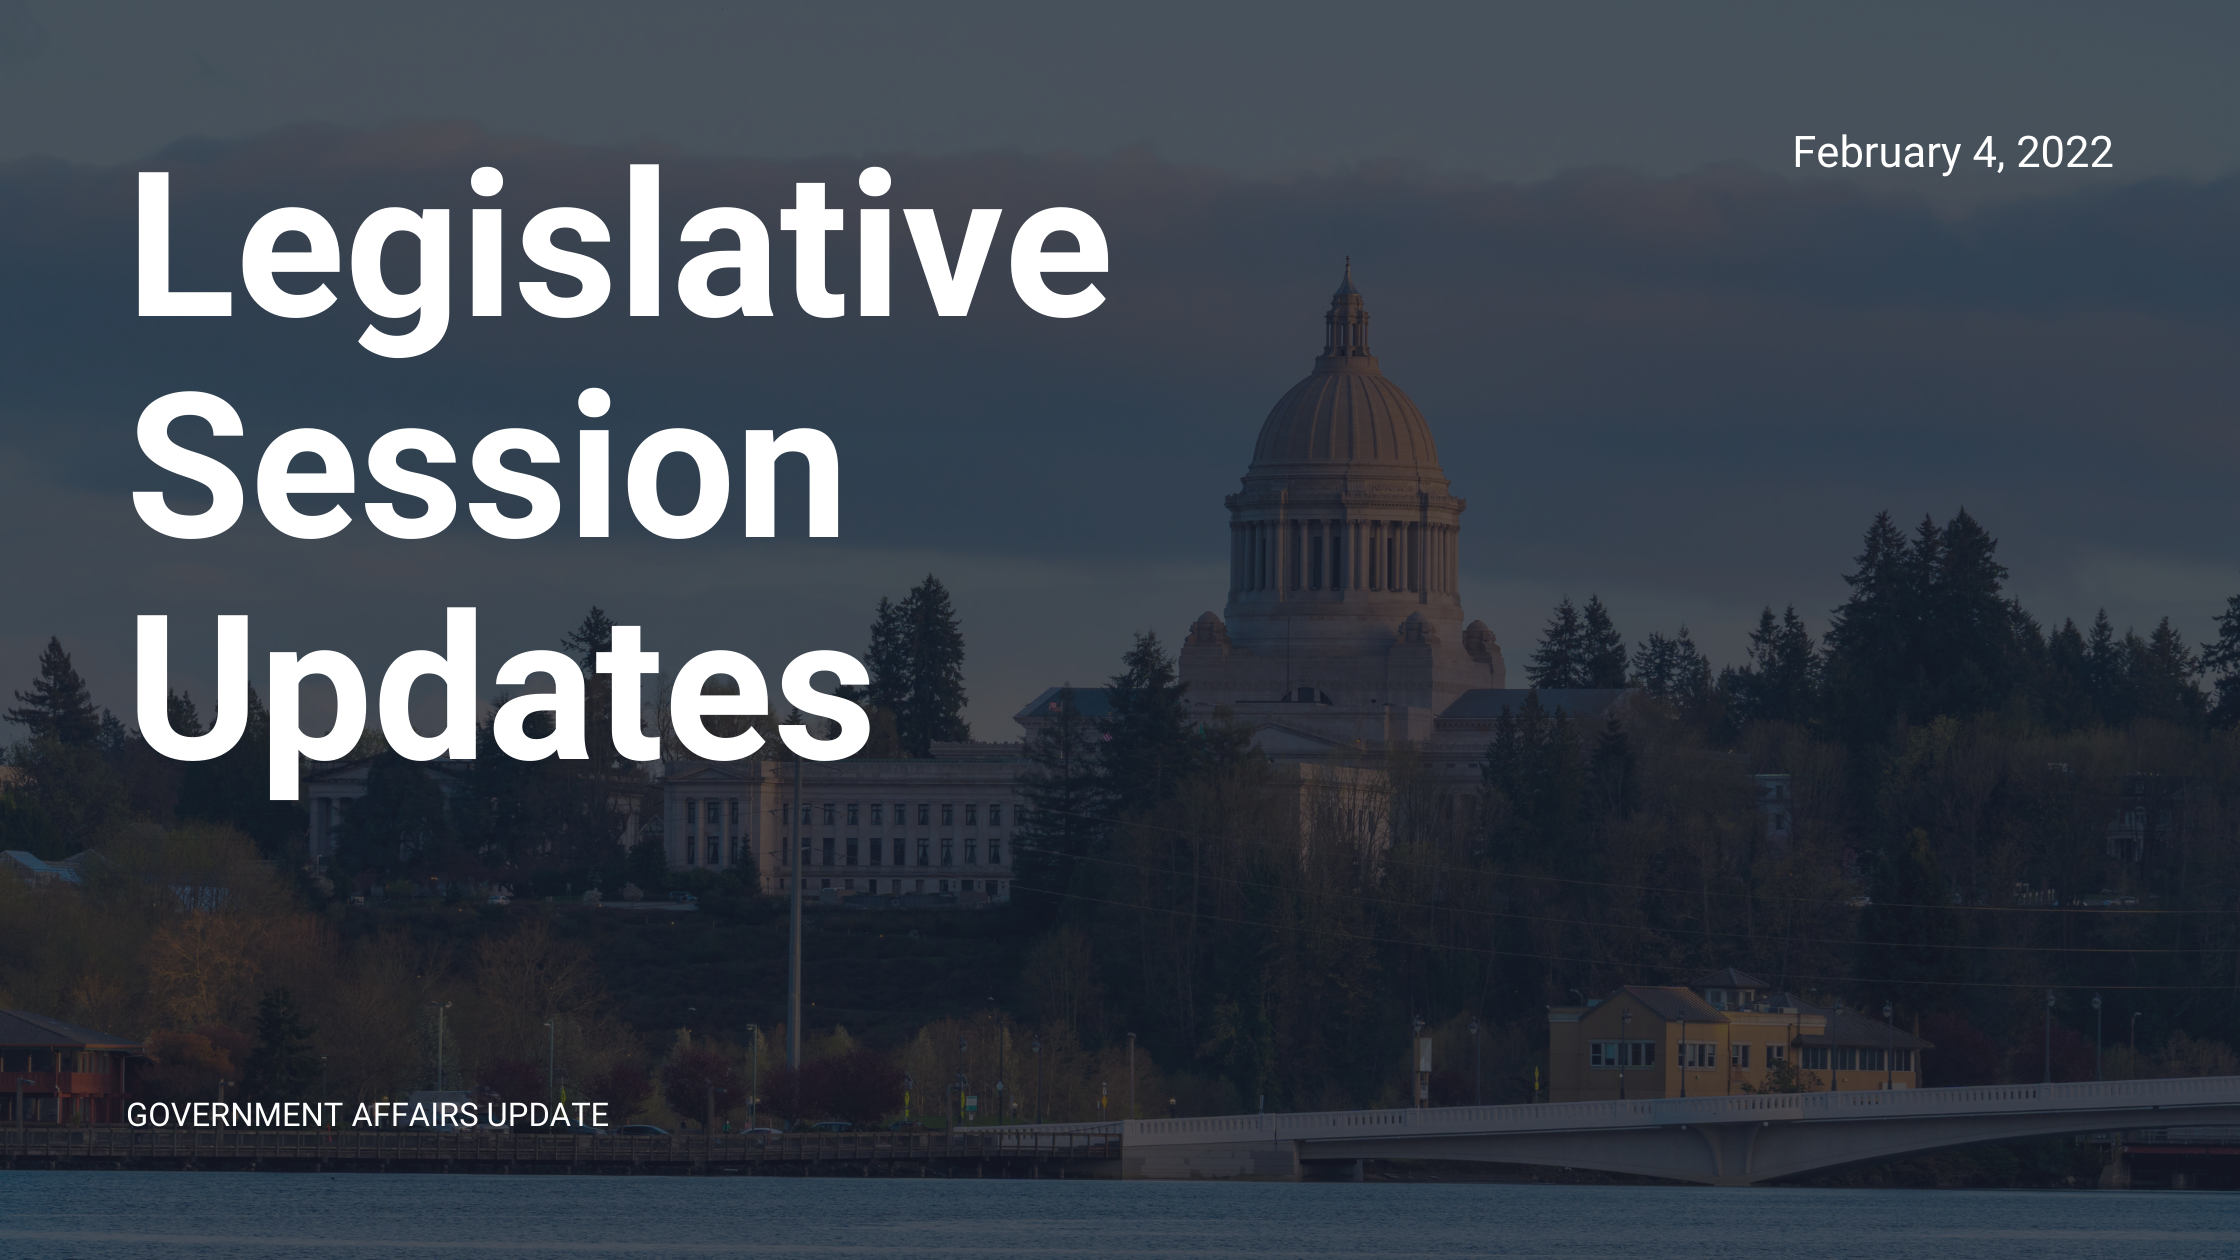 Legislative Session Updates: State of the Region Event